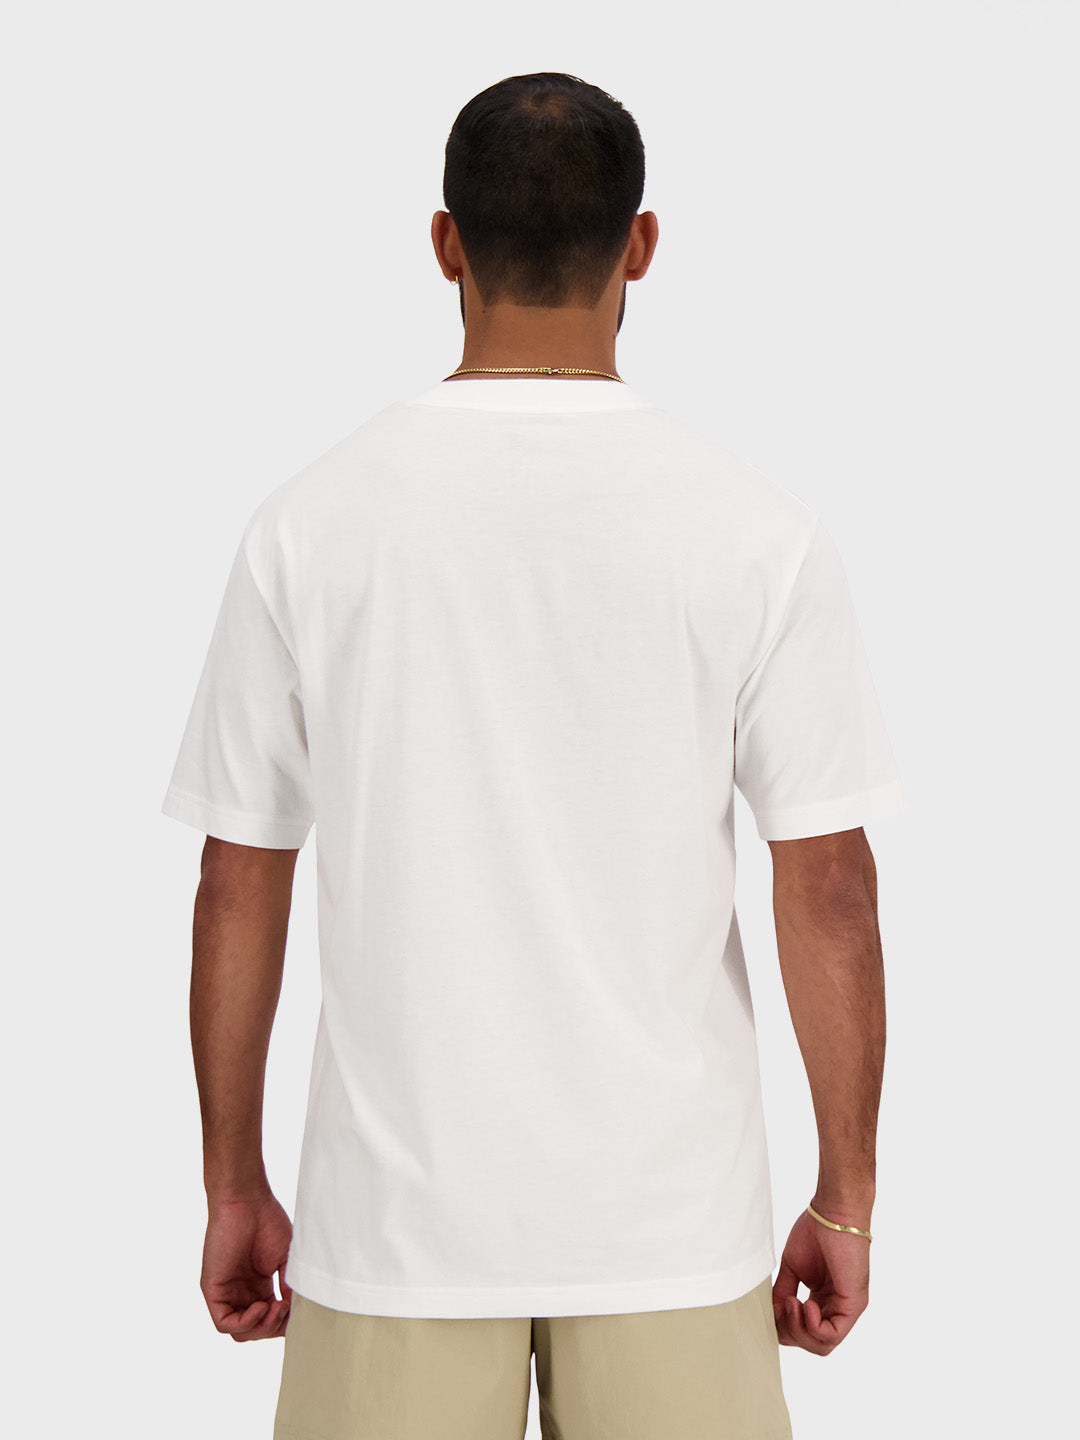 new balance t-shirt white